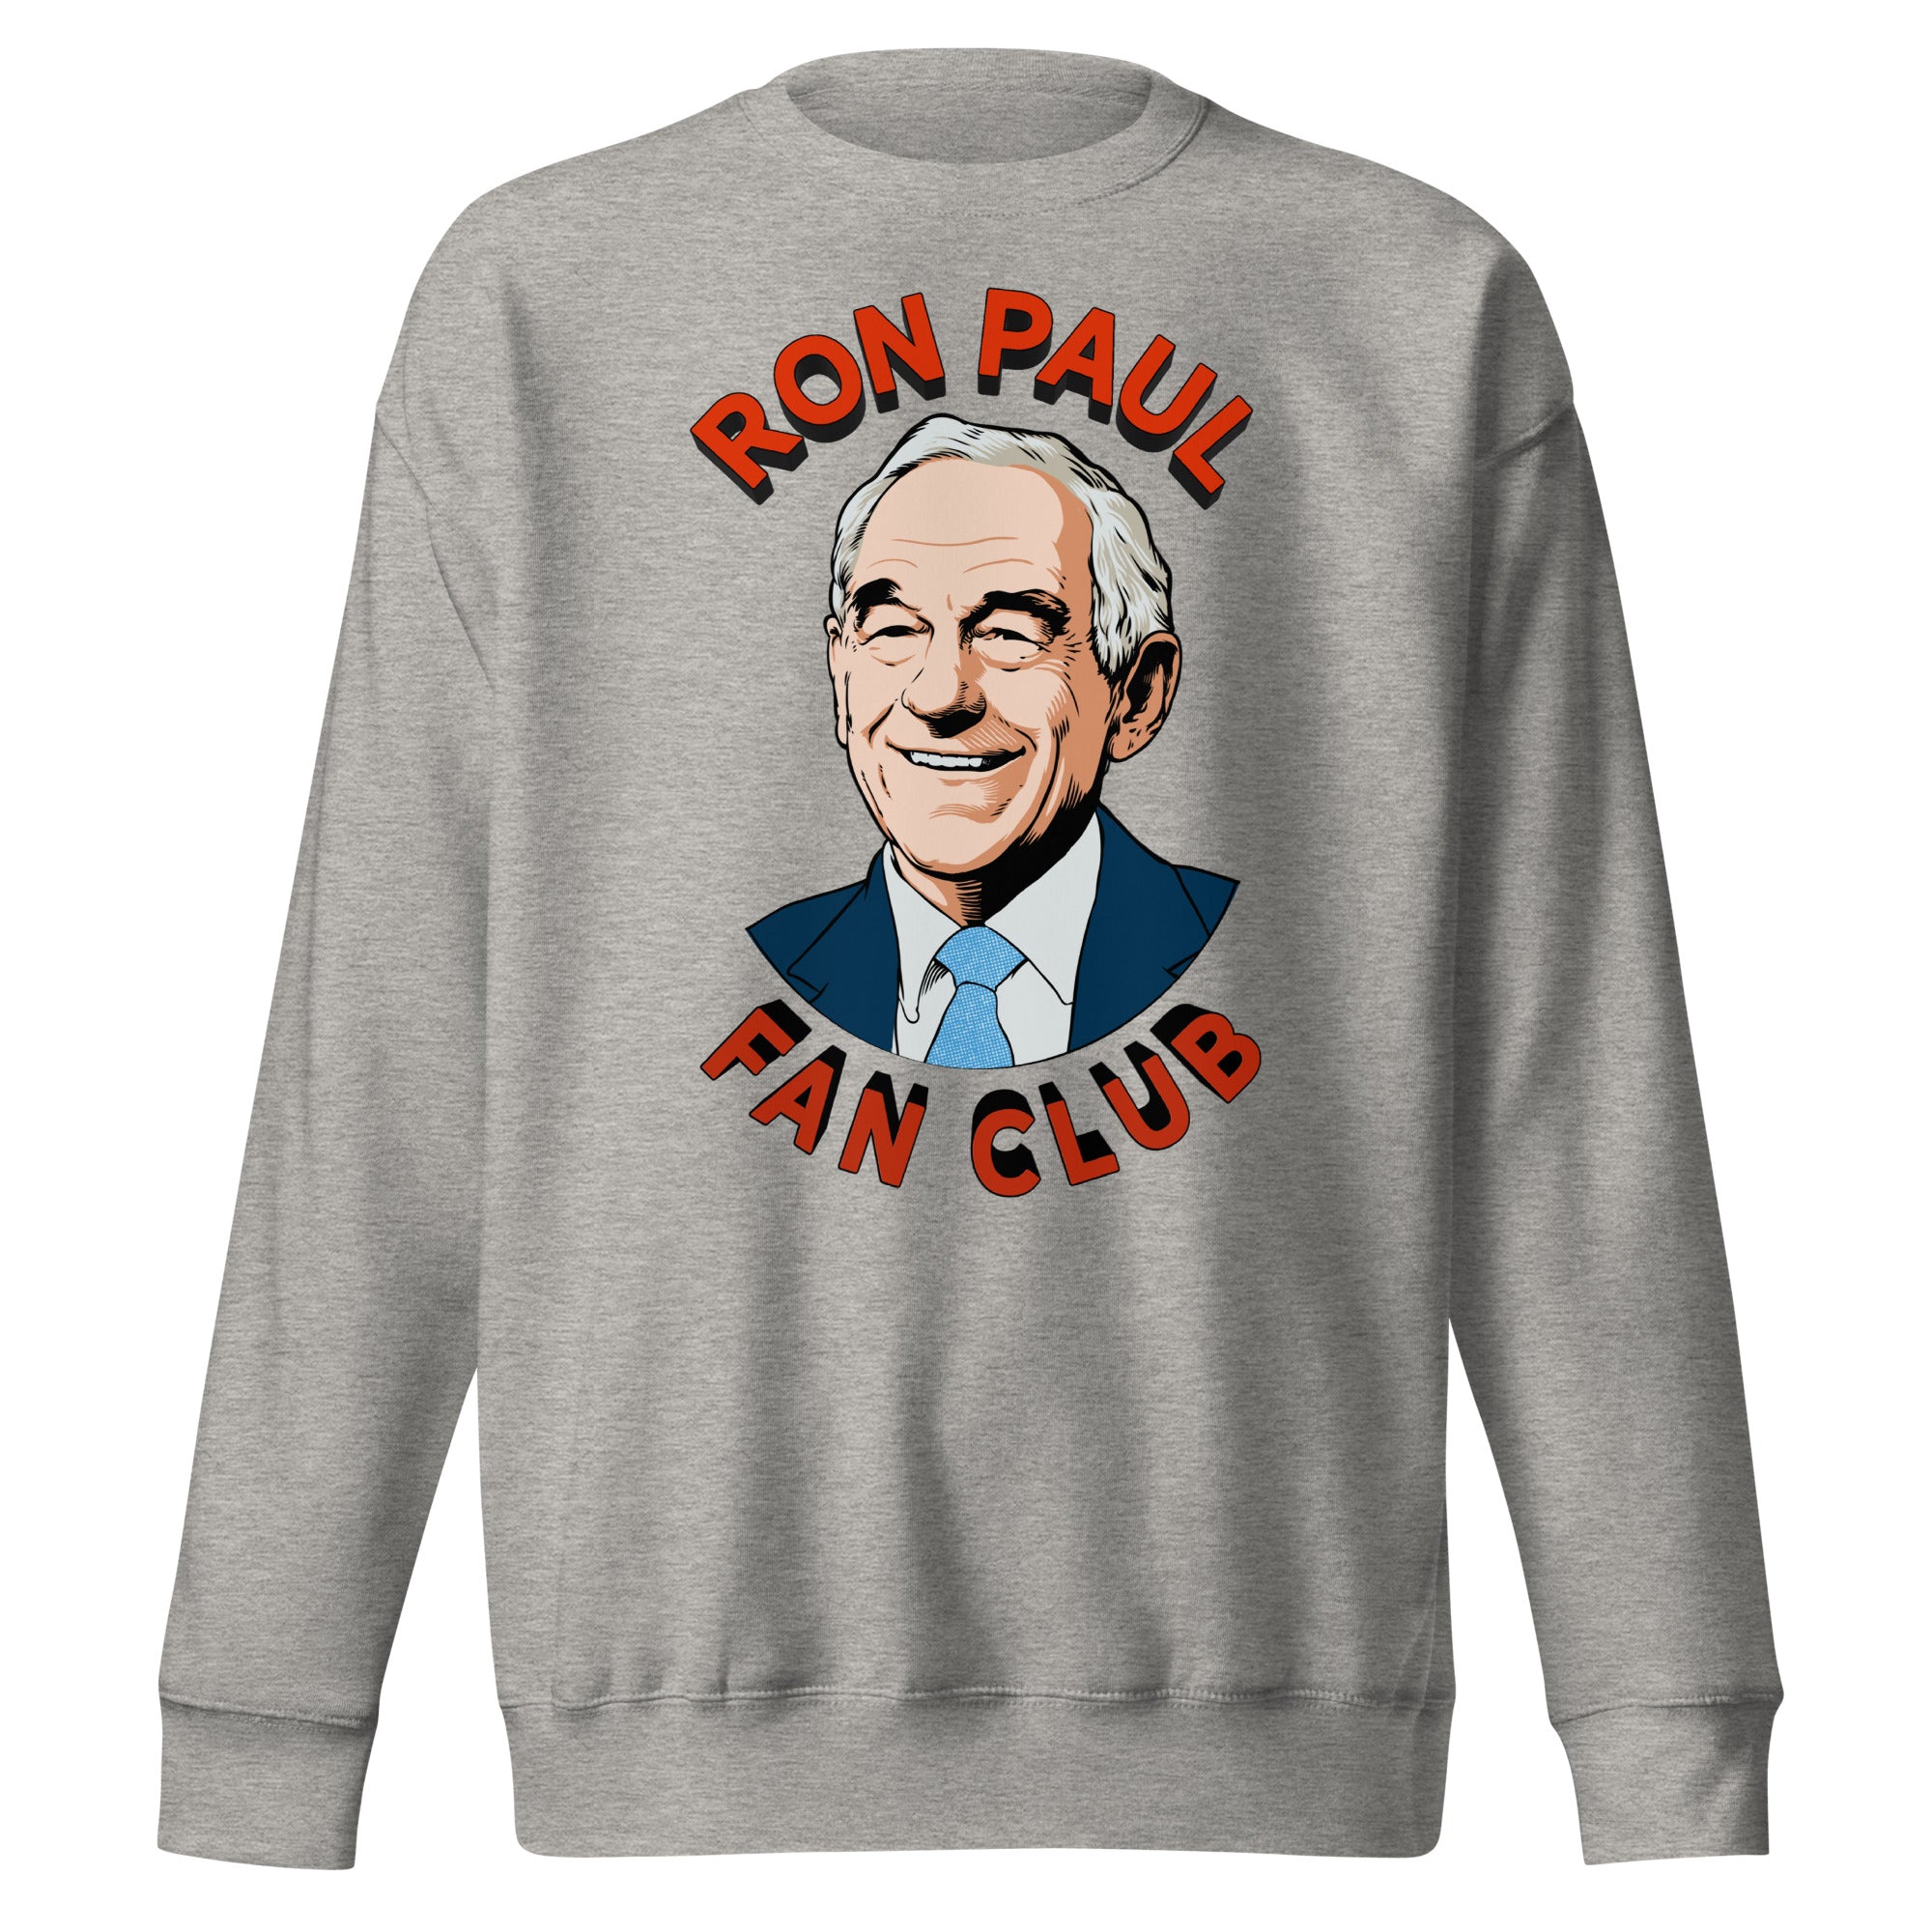 Ron Paul Fan Club Crewneck Sweatshirt